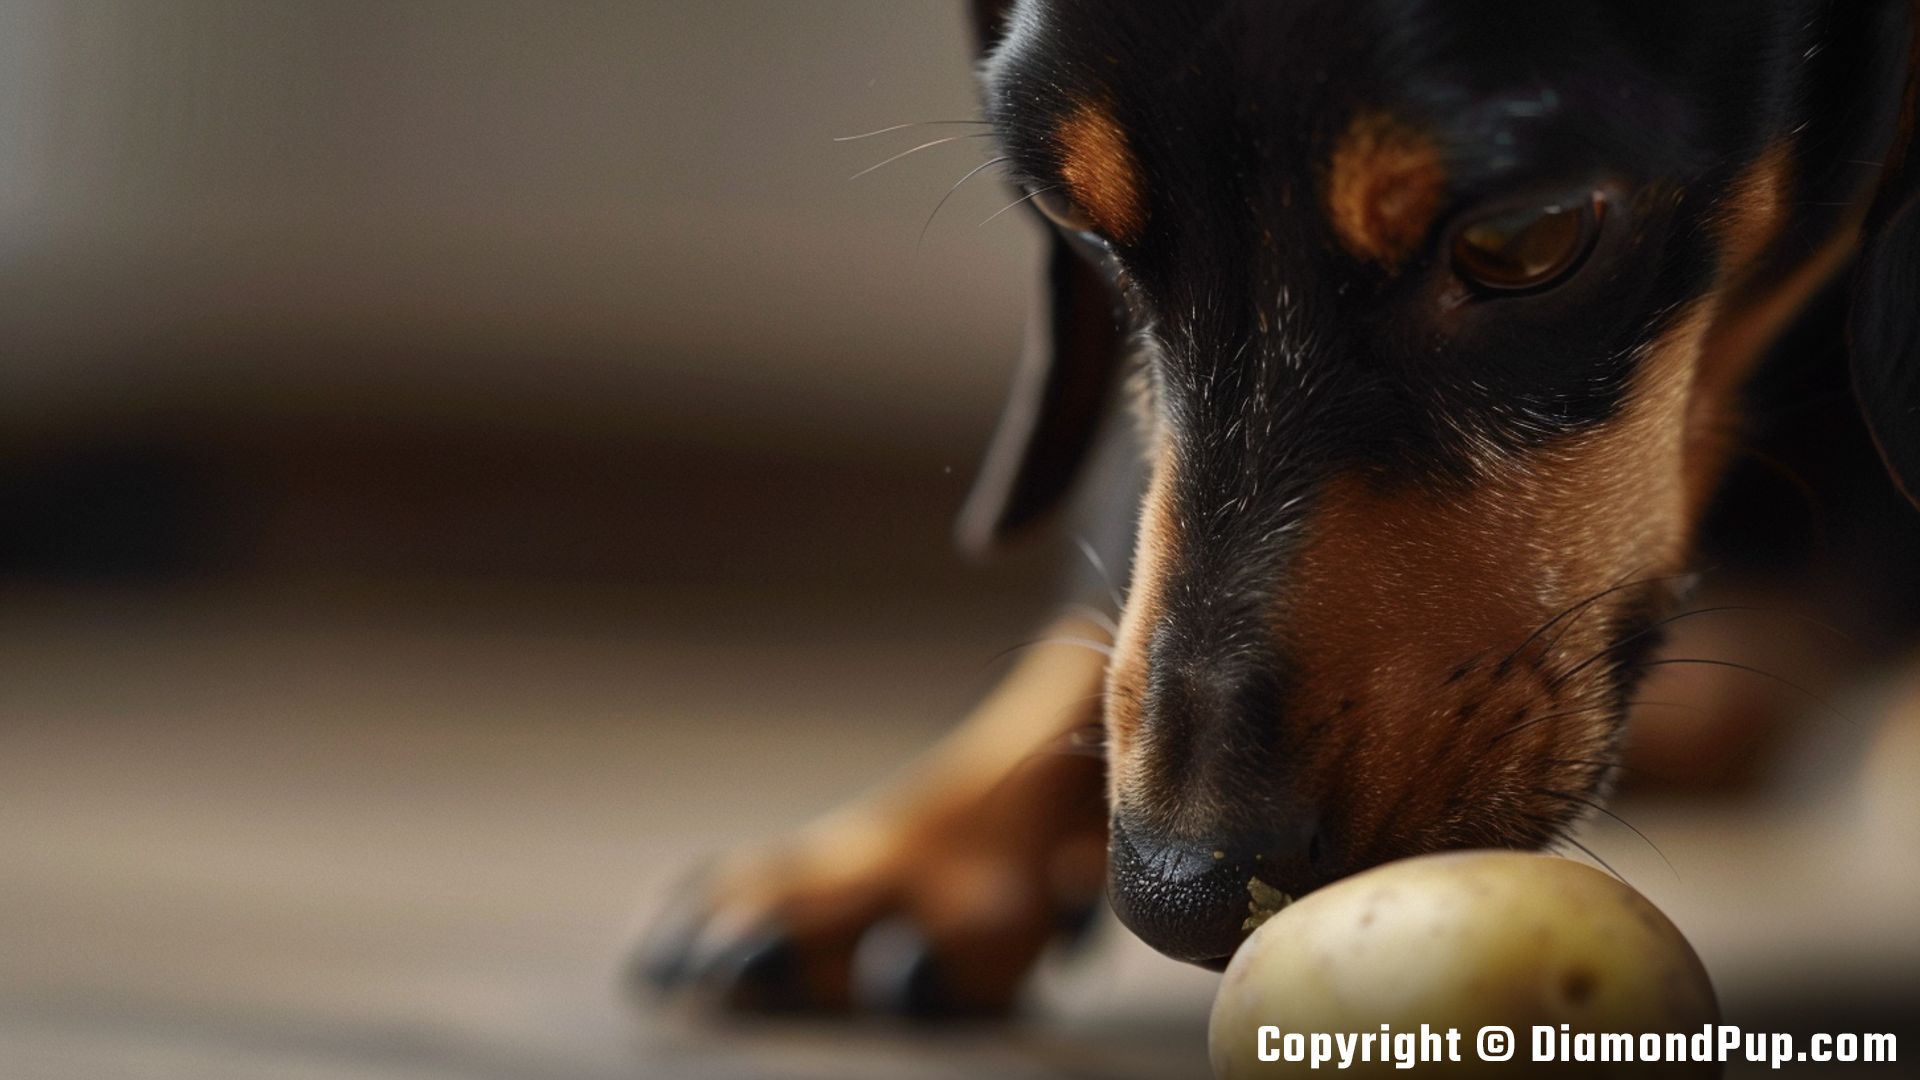 Photograph of a Cute Dachshund Eating Potato